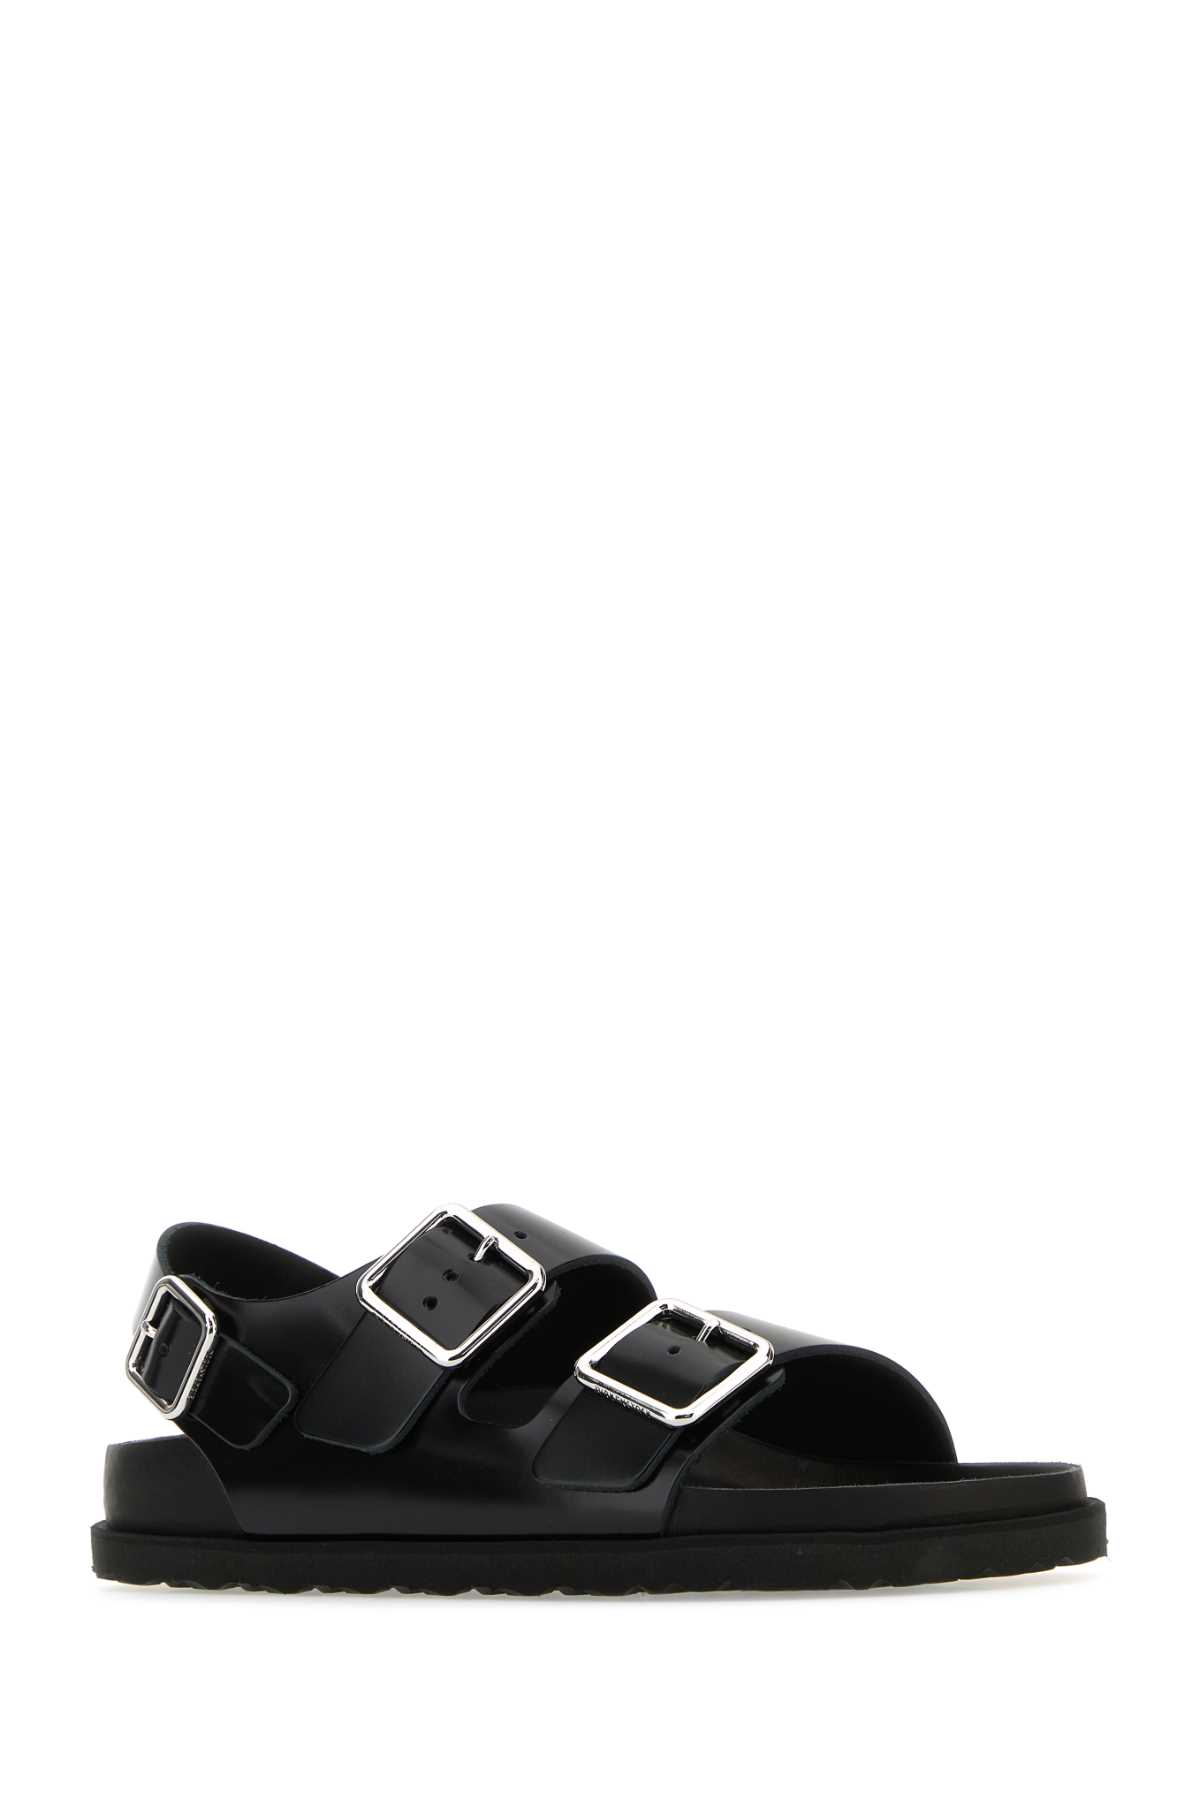 Shop Birkenstock Black Leather Milano Avantgarde Sandals In Blacksilver